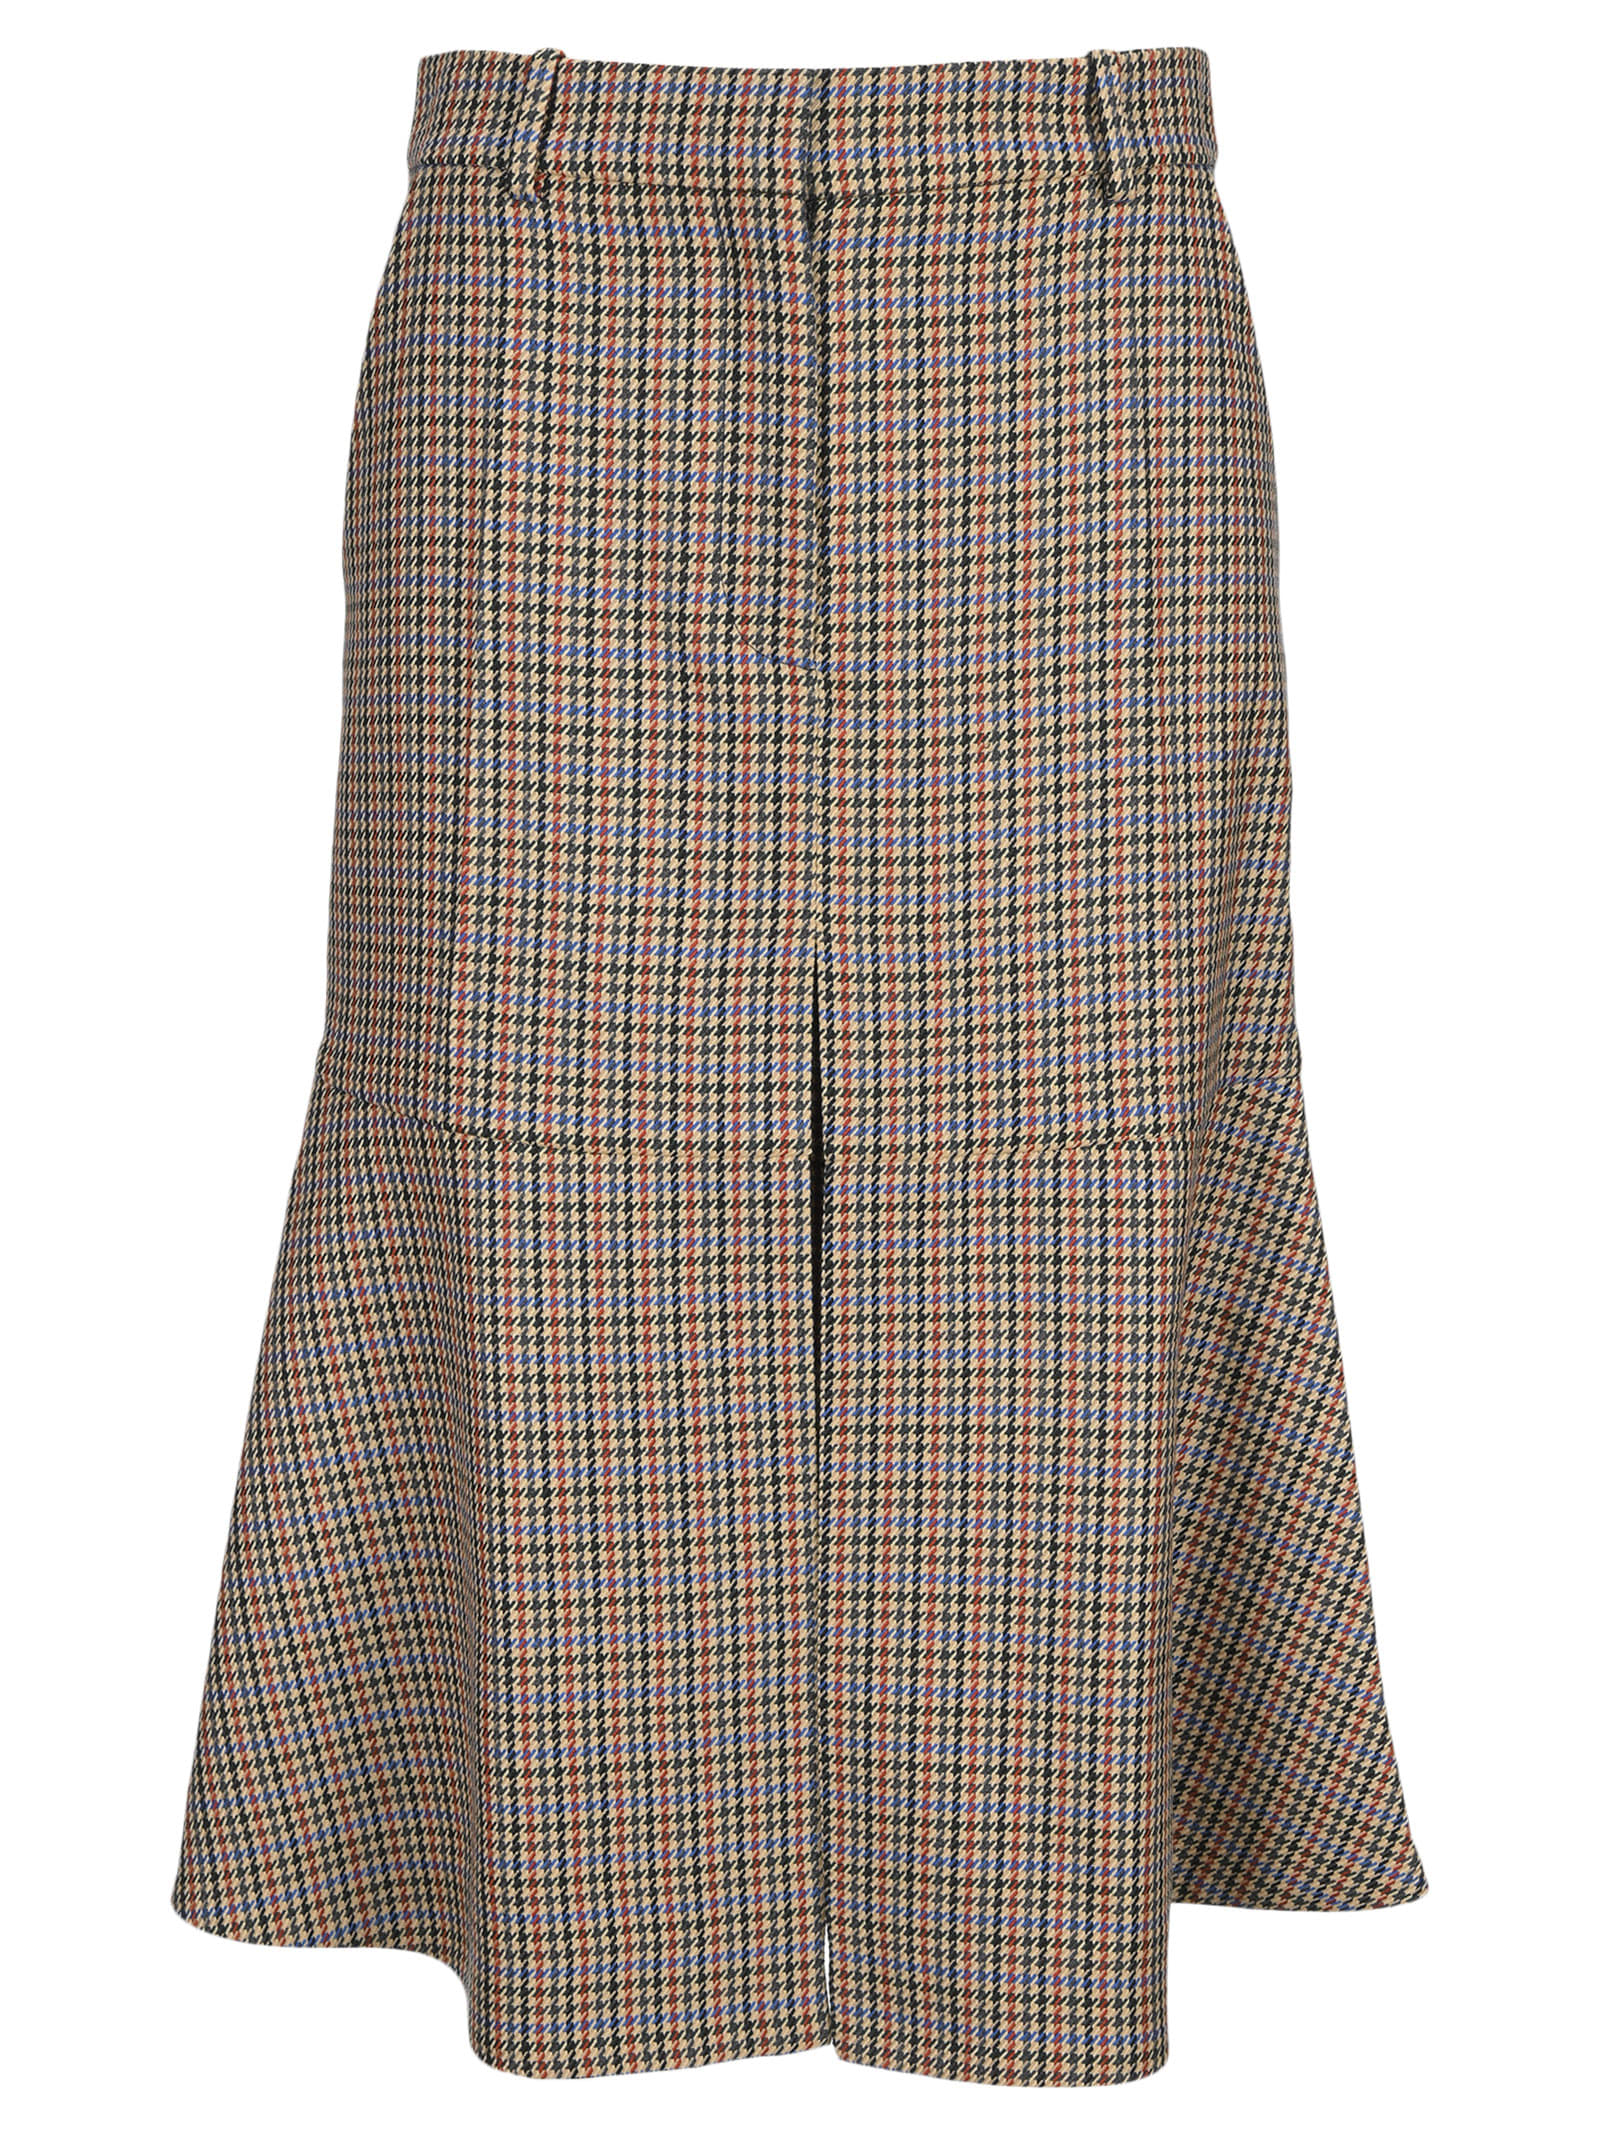 Stella McCartney Naomi Wool Skirt